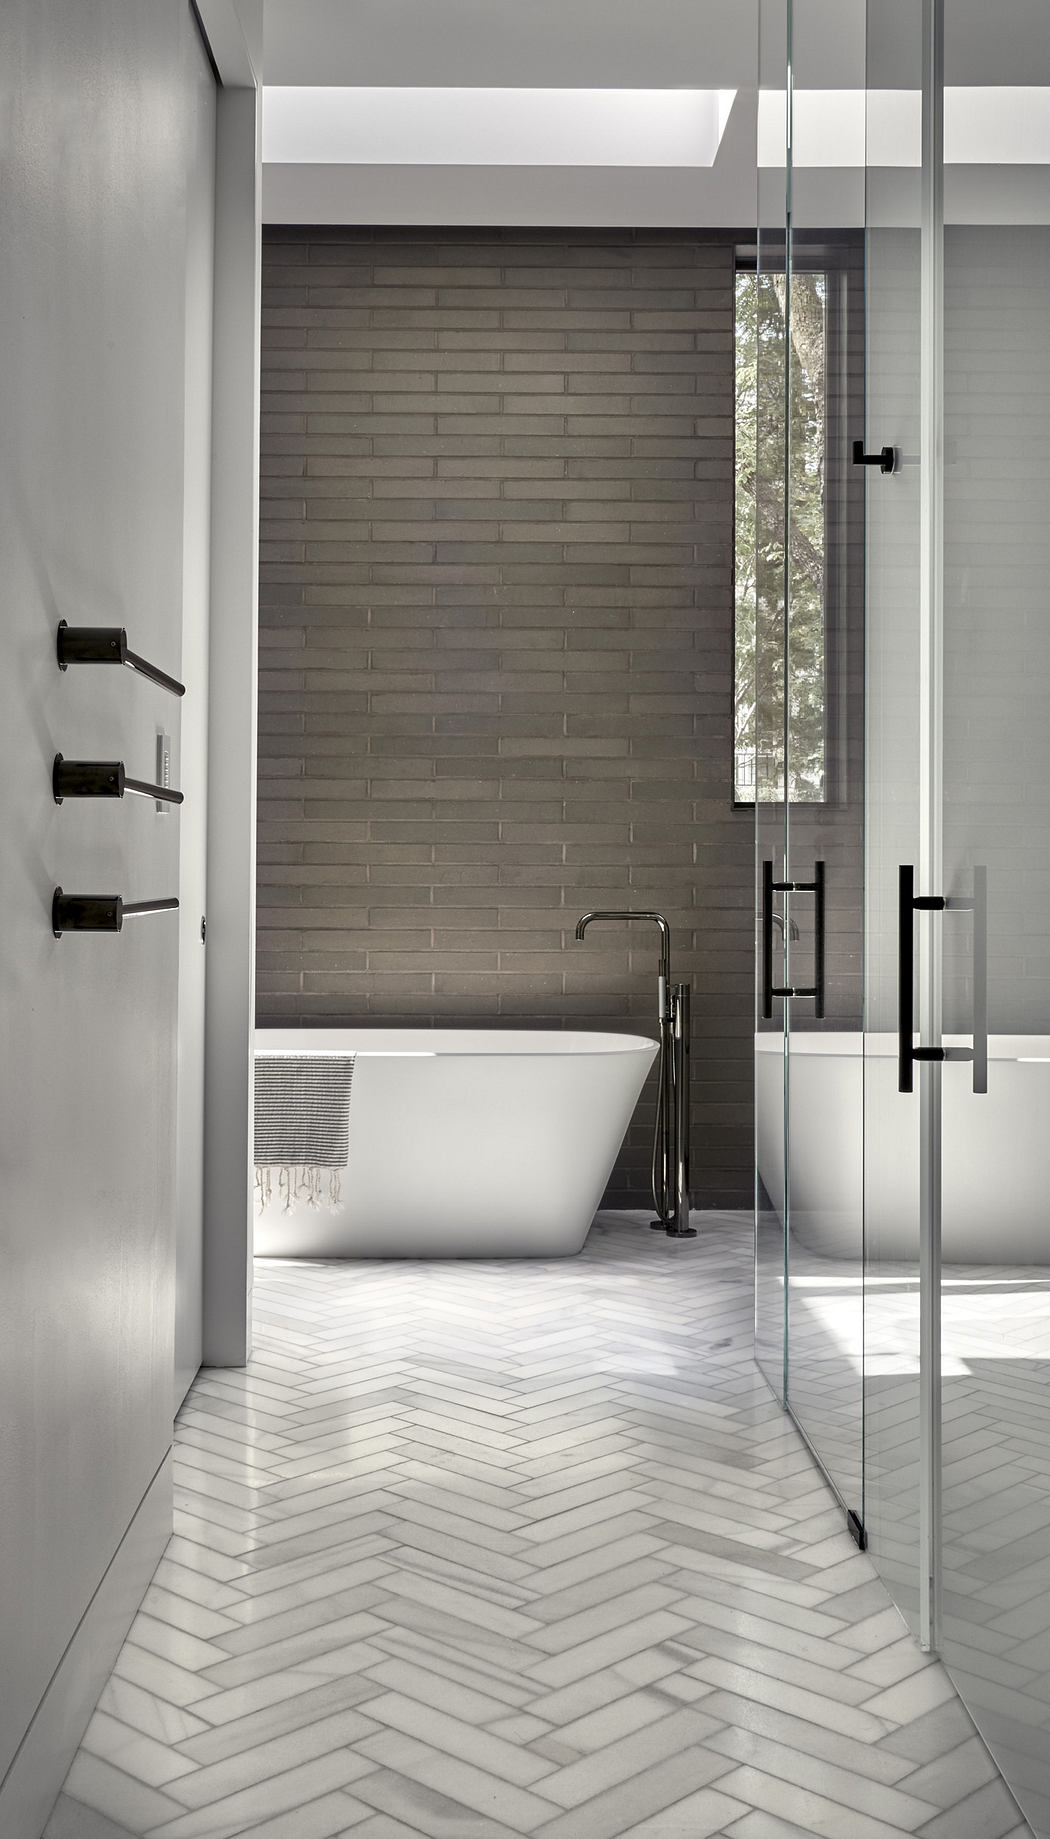 Modern bathroom with herringbone floor tiles and glass shower.